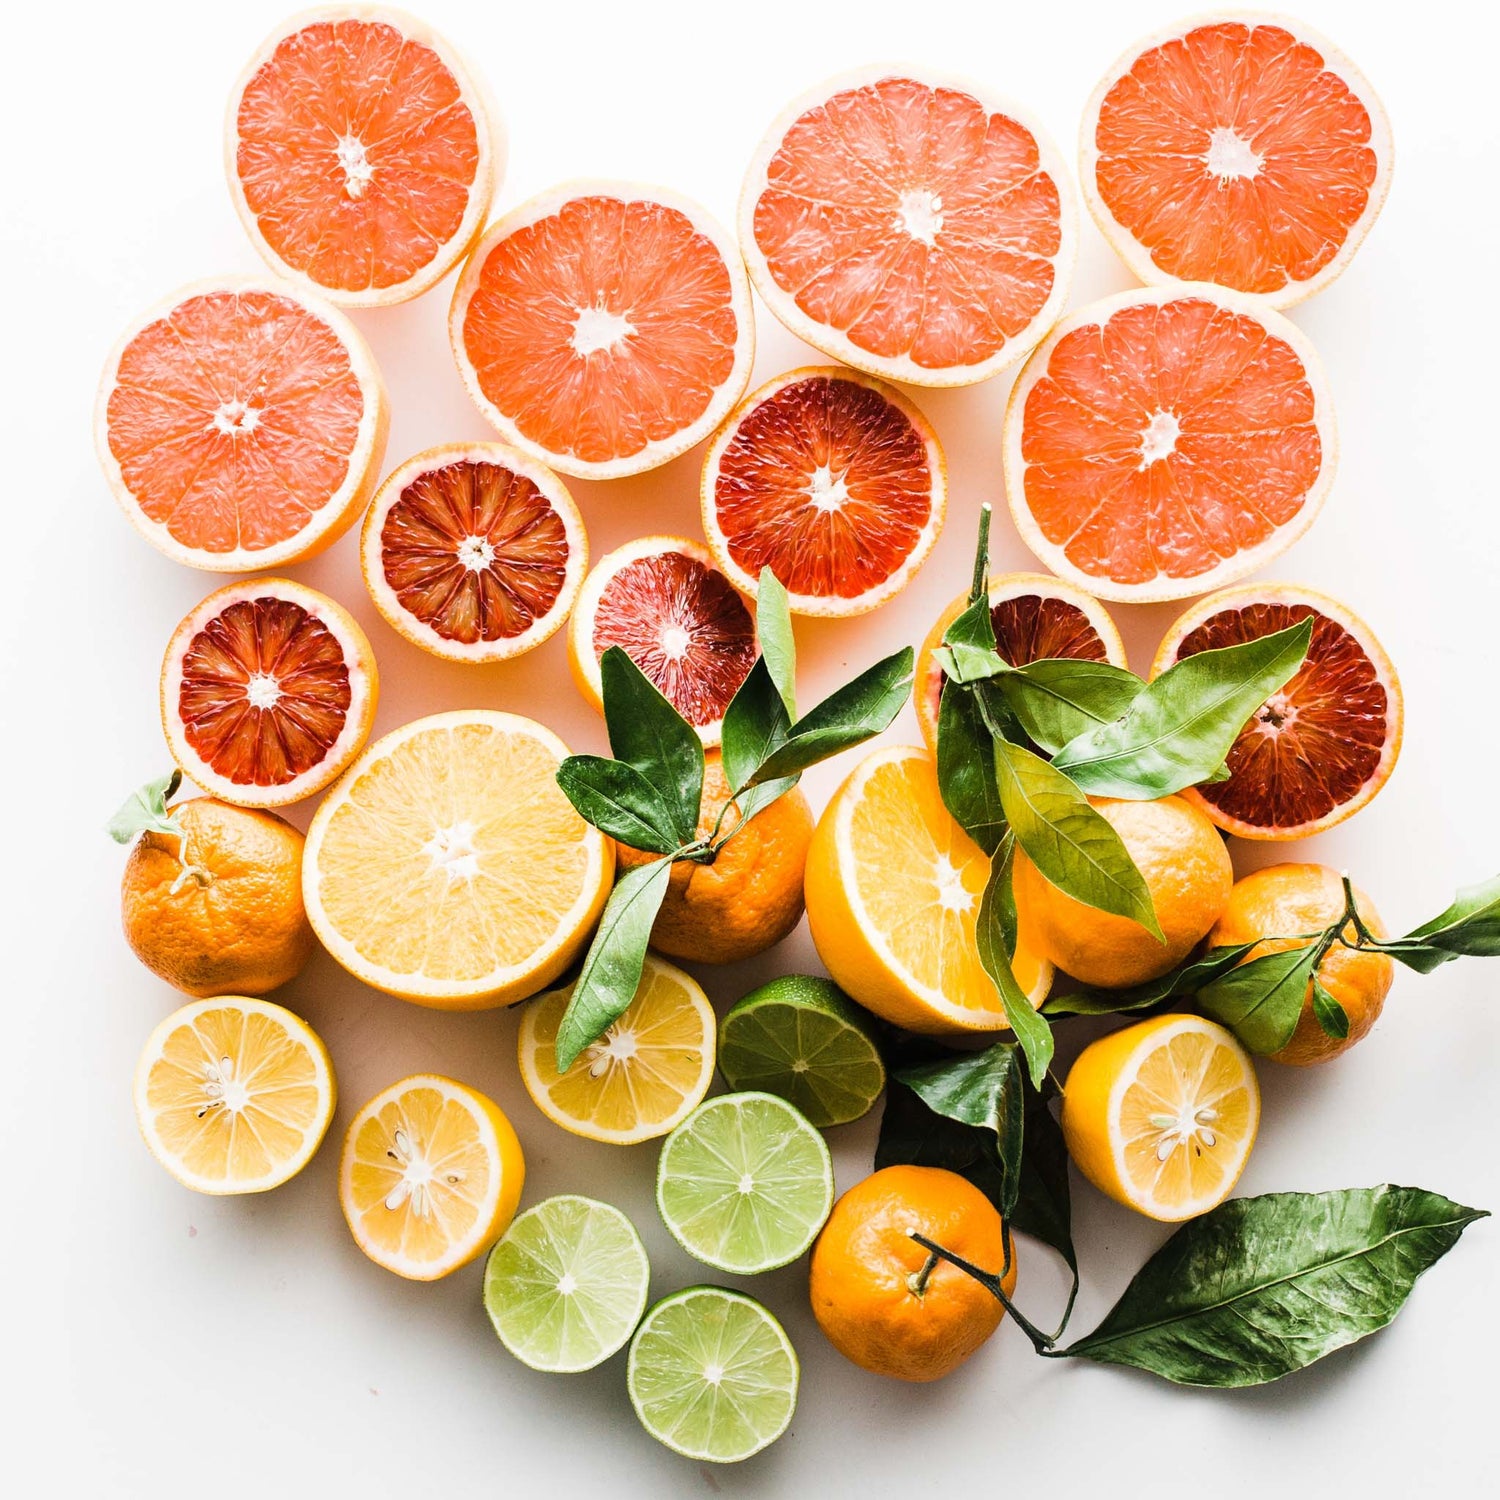 Fresh sliced lemons, limes, oranges, and grapefruits.